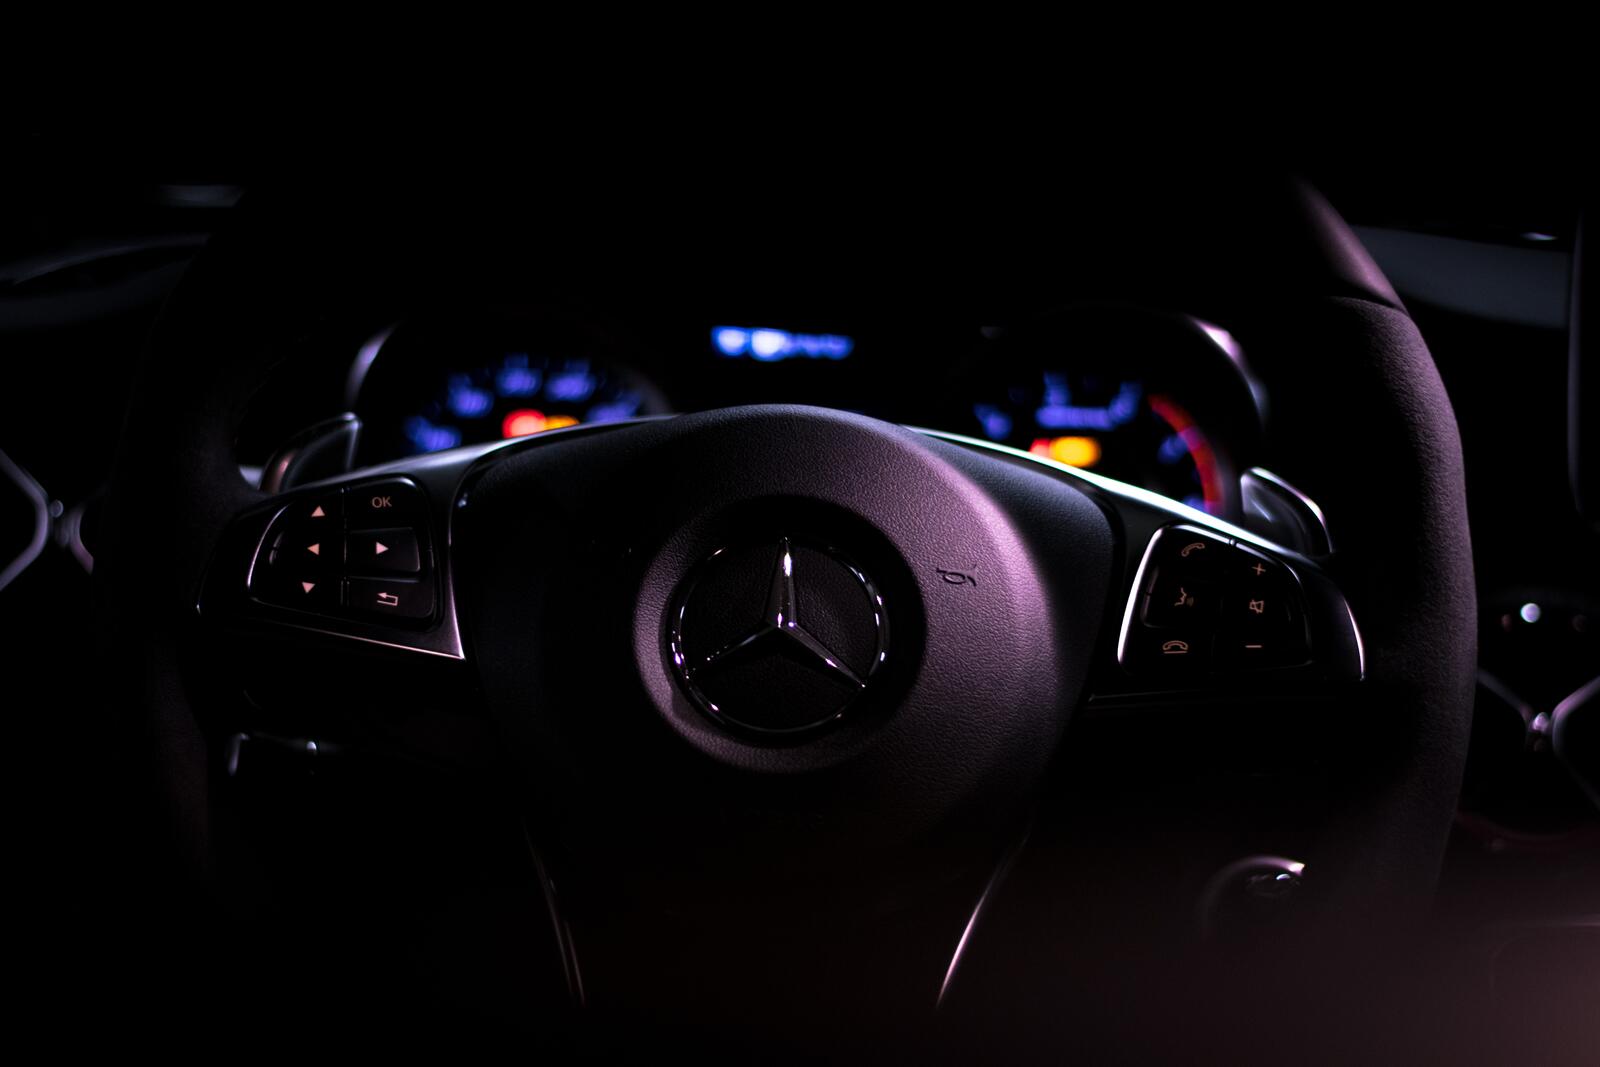 Wallpapers cars steering wheel Mercedes Benz on the desktop